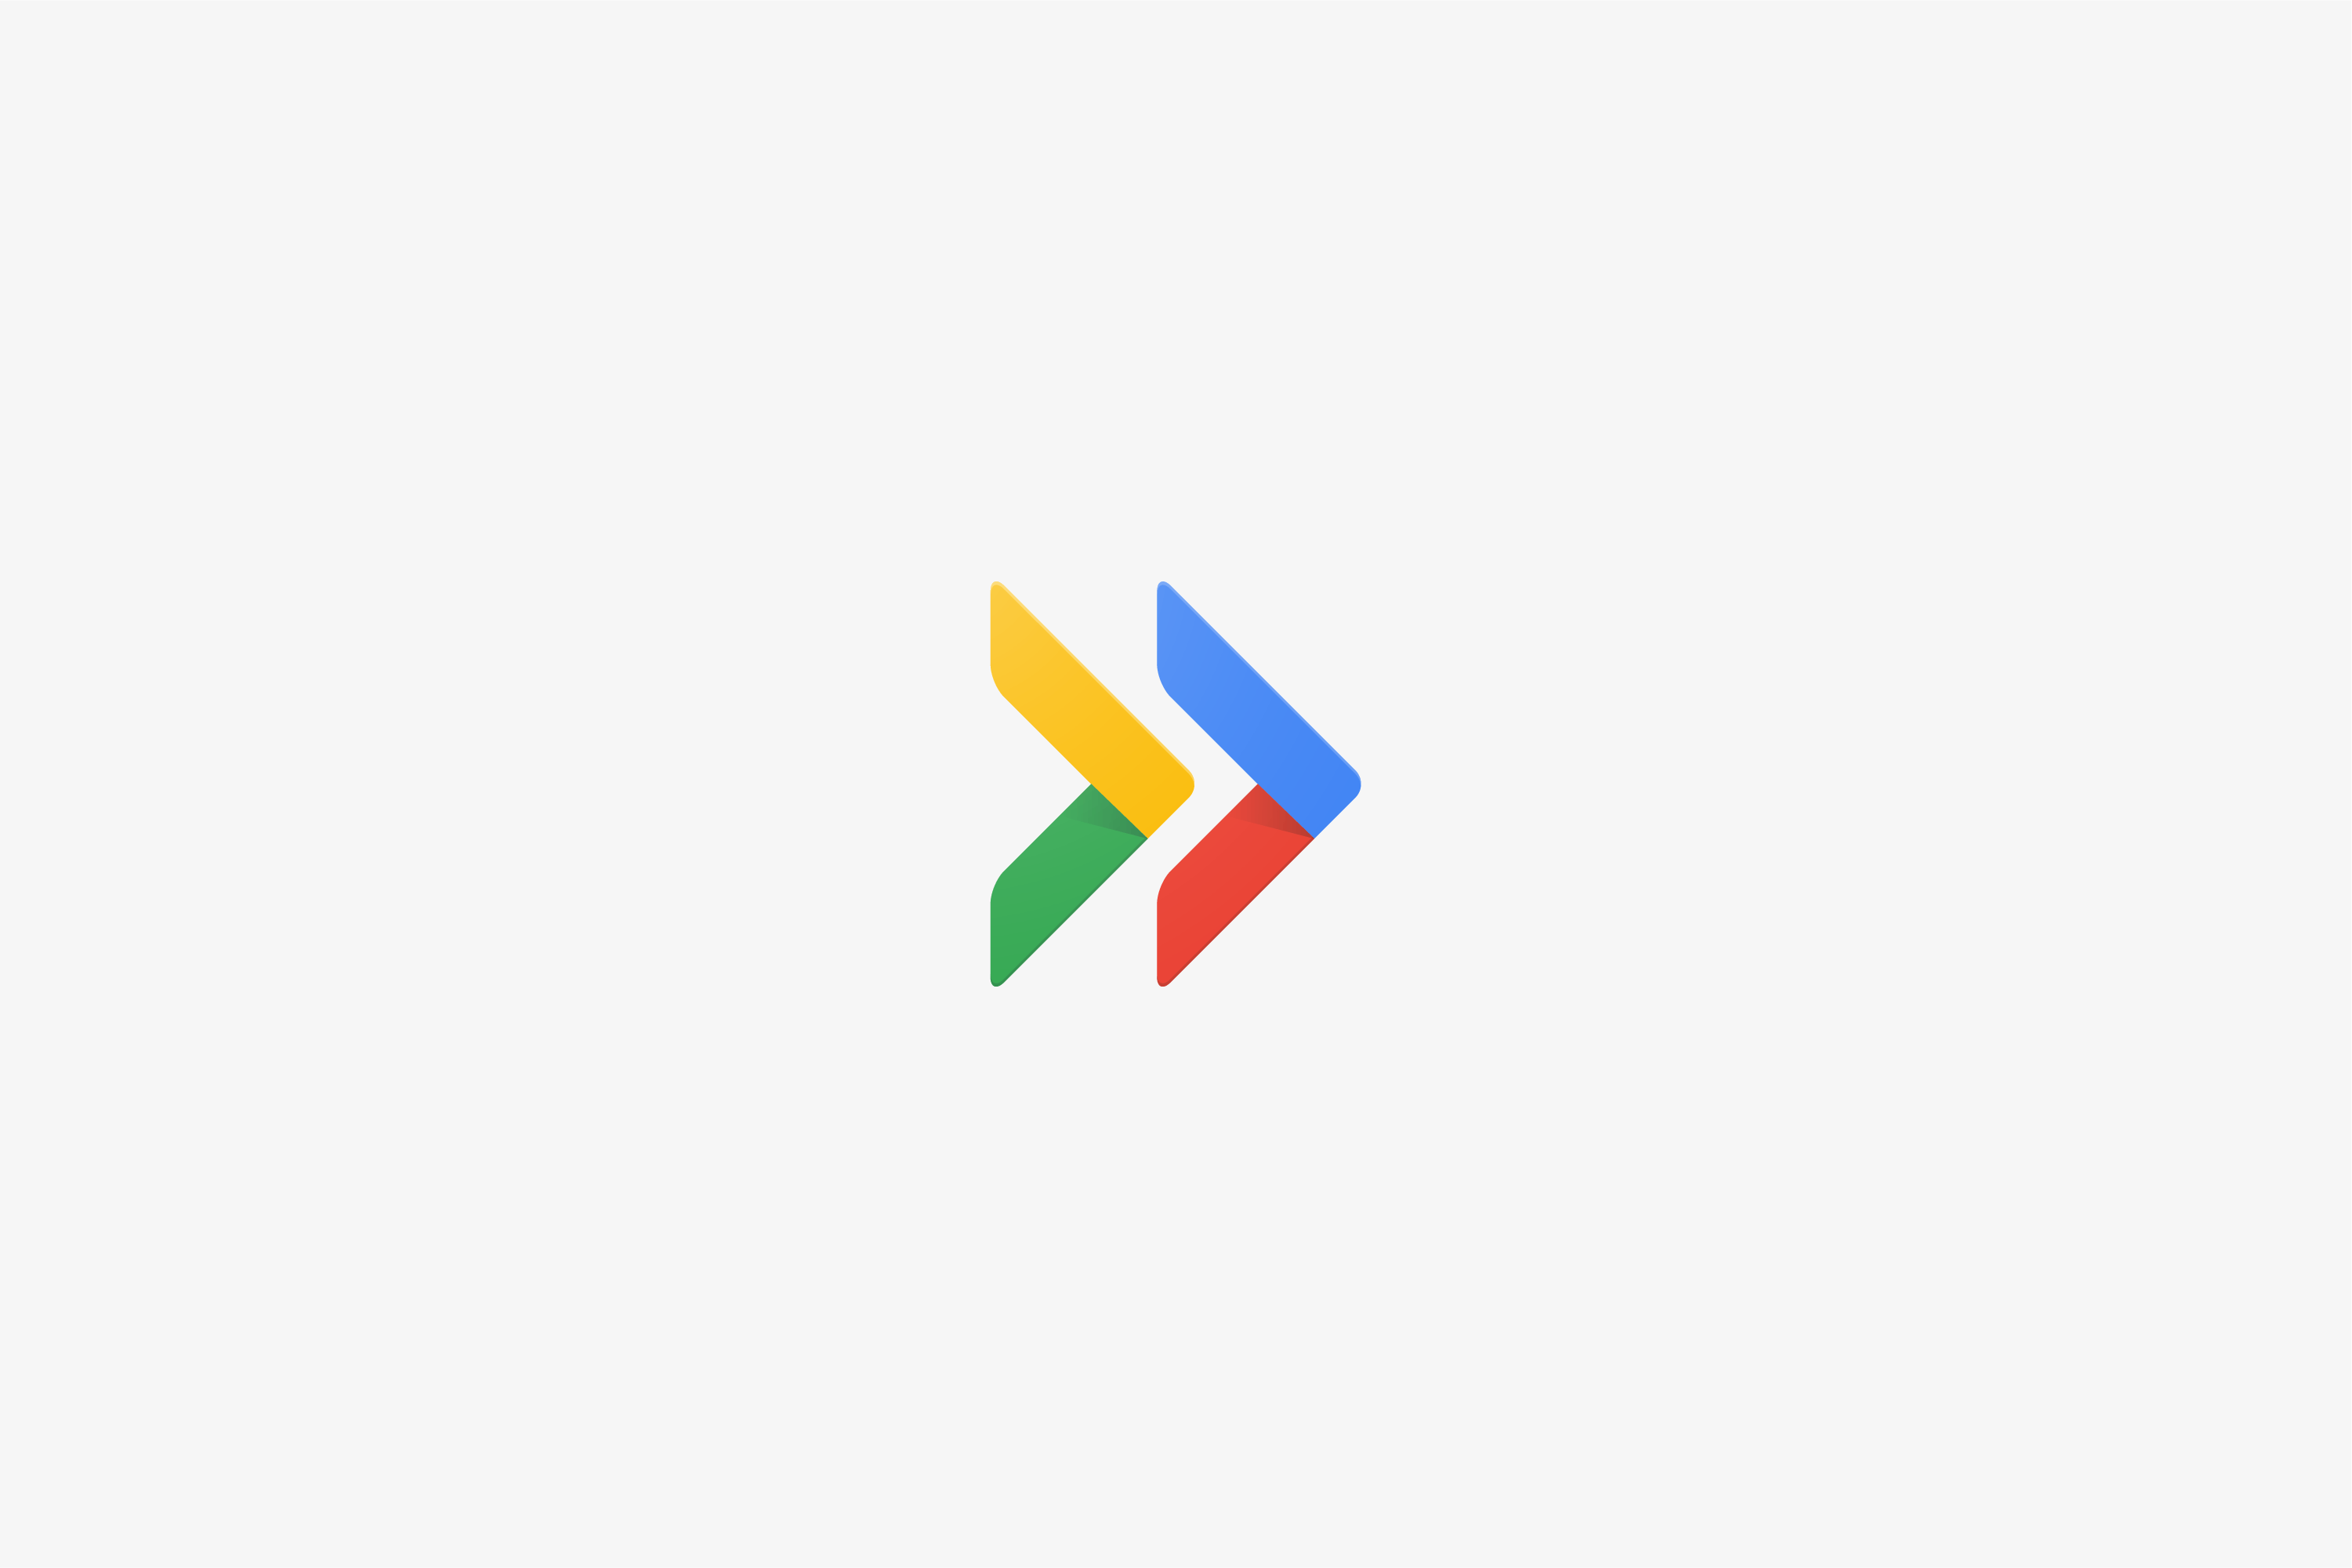 Material Logo - Google Digital Academy - Brand Identity Design | Jack Morgan